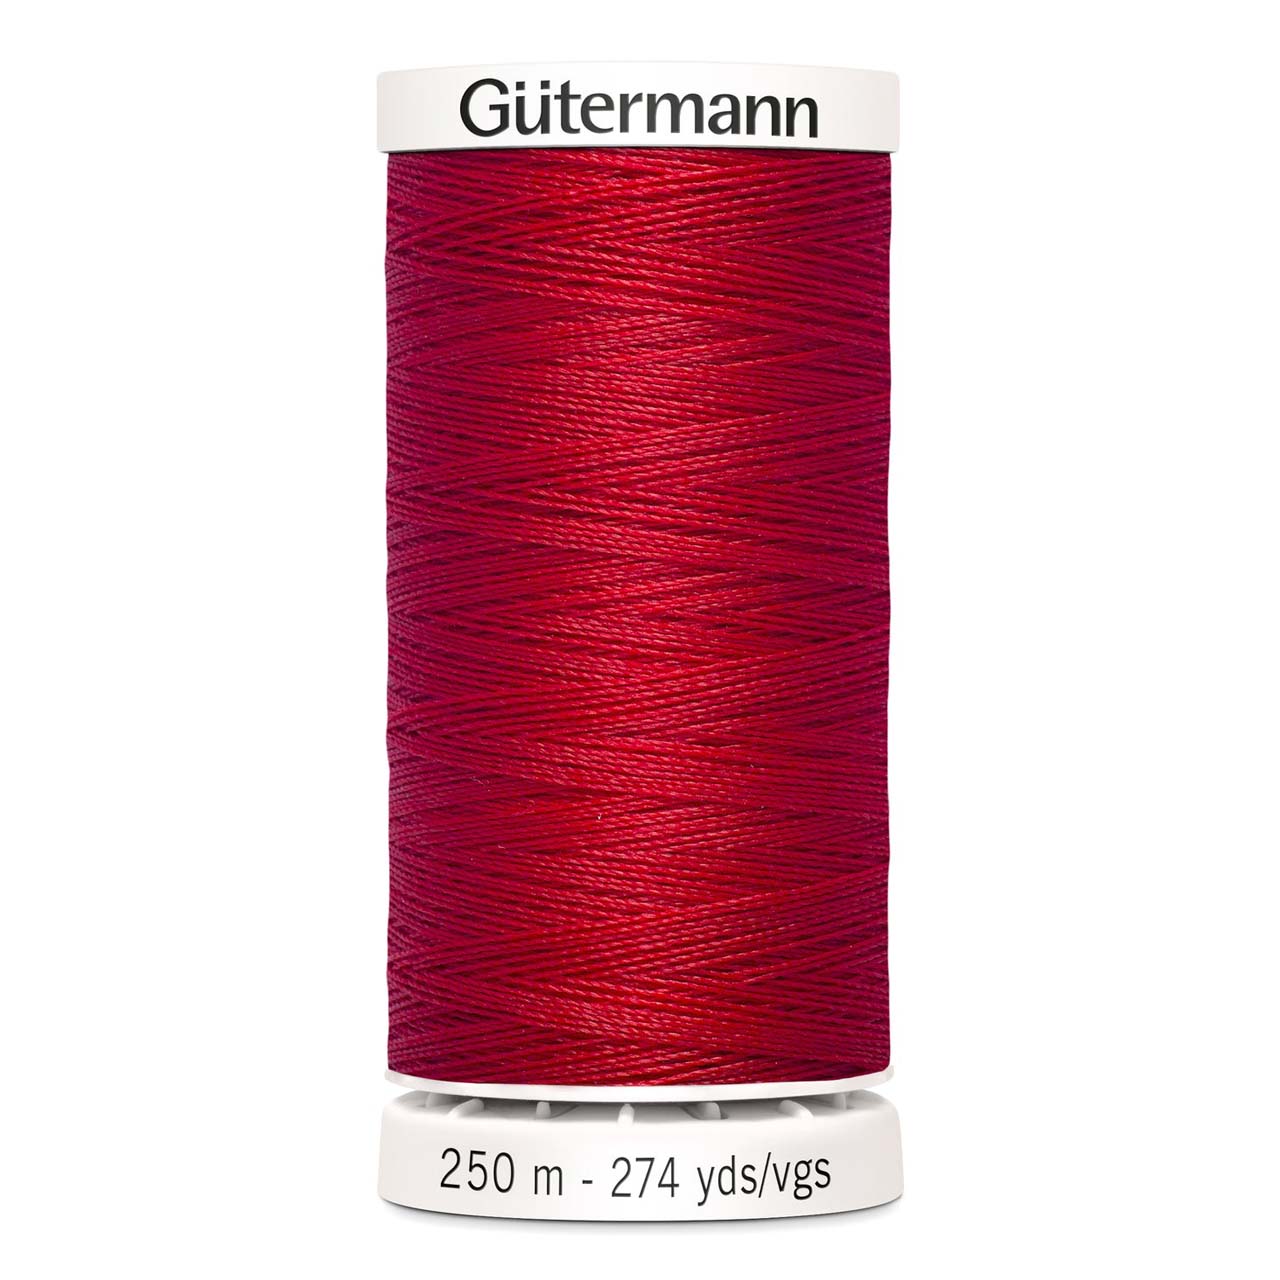 Gutermann thread 156 sewing thread 250 metres